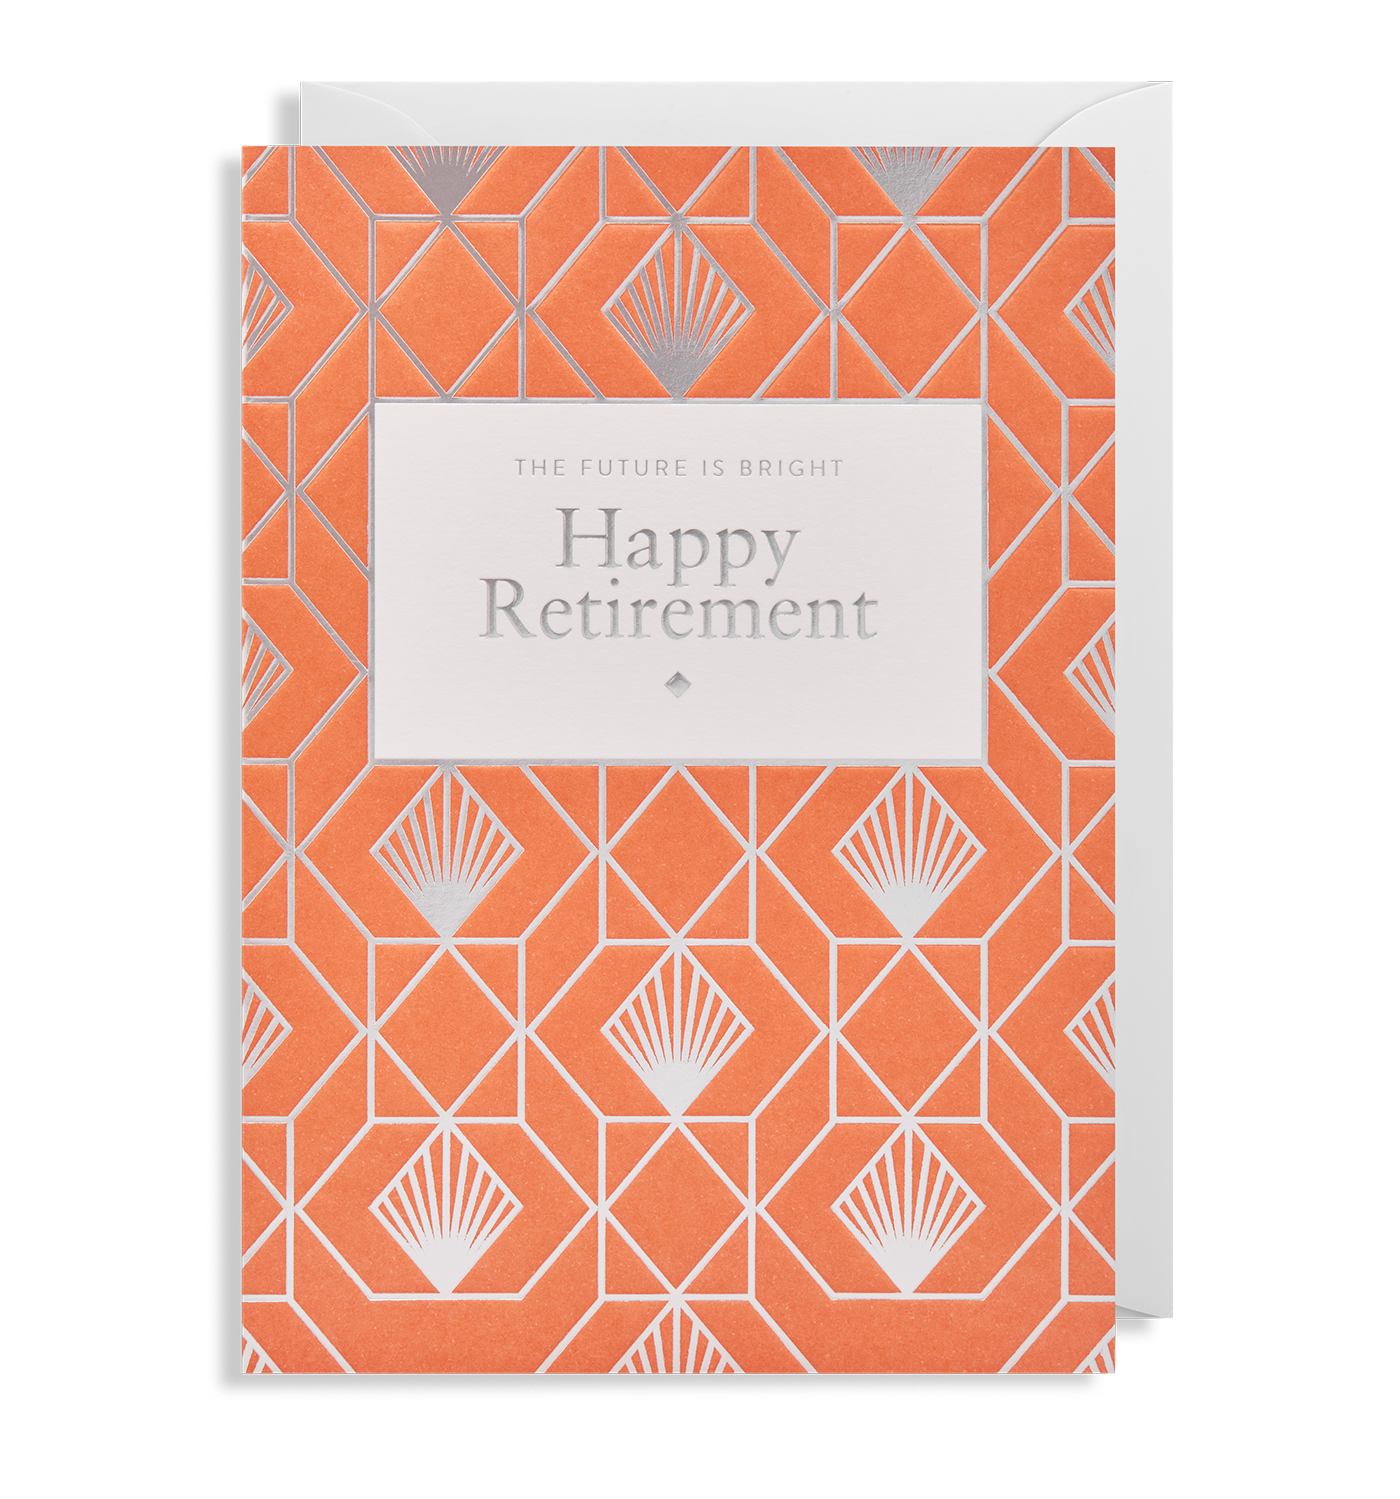 Happy Retirement The Future Is Bright - Card